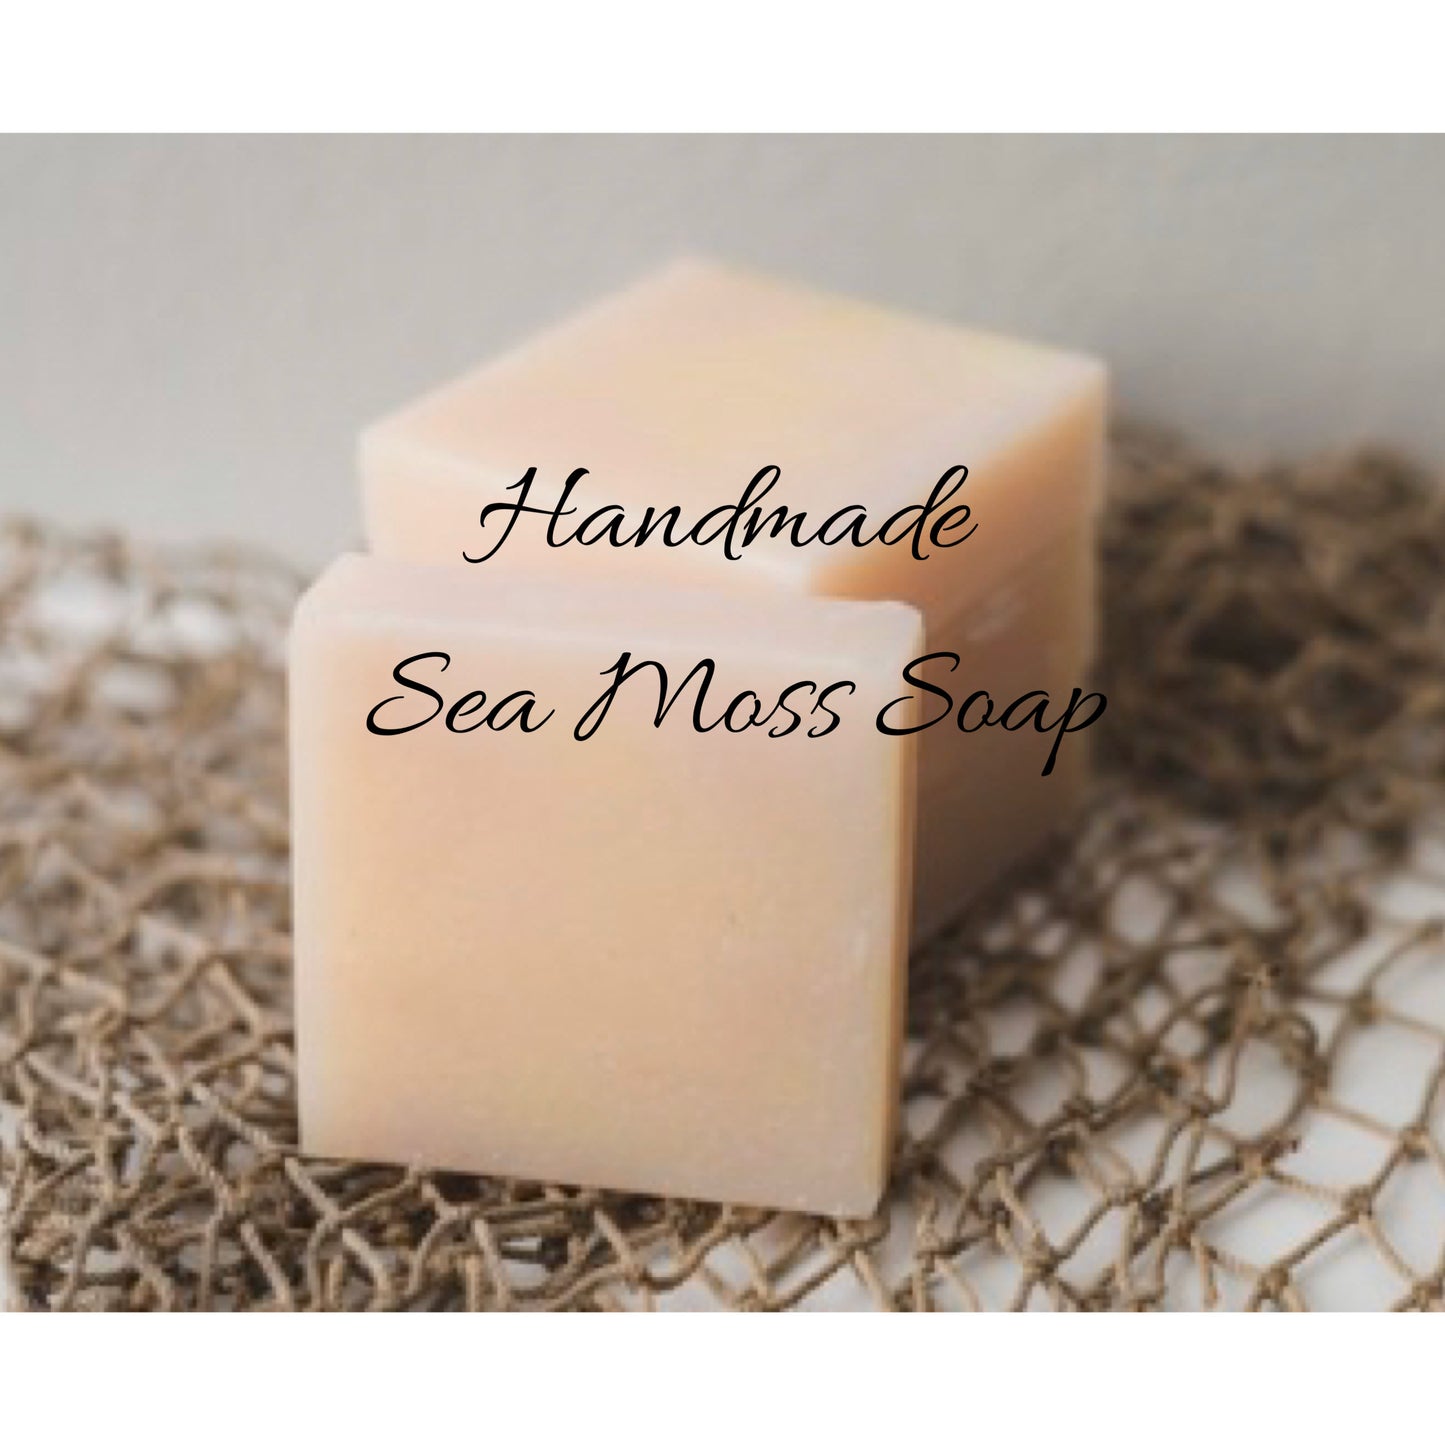 Sea Moss Soap (handmade)